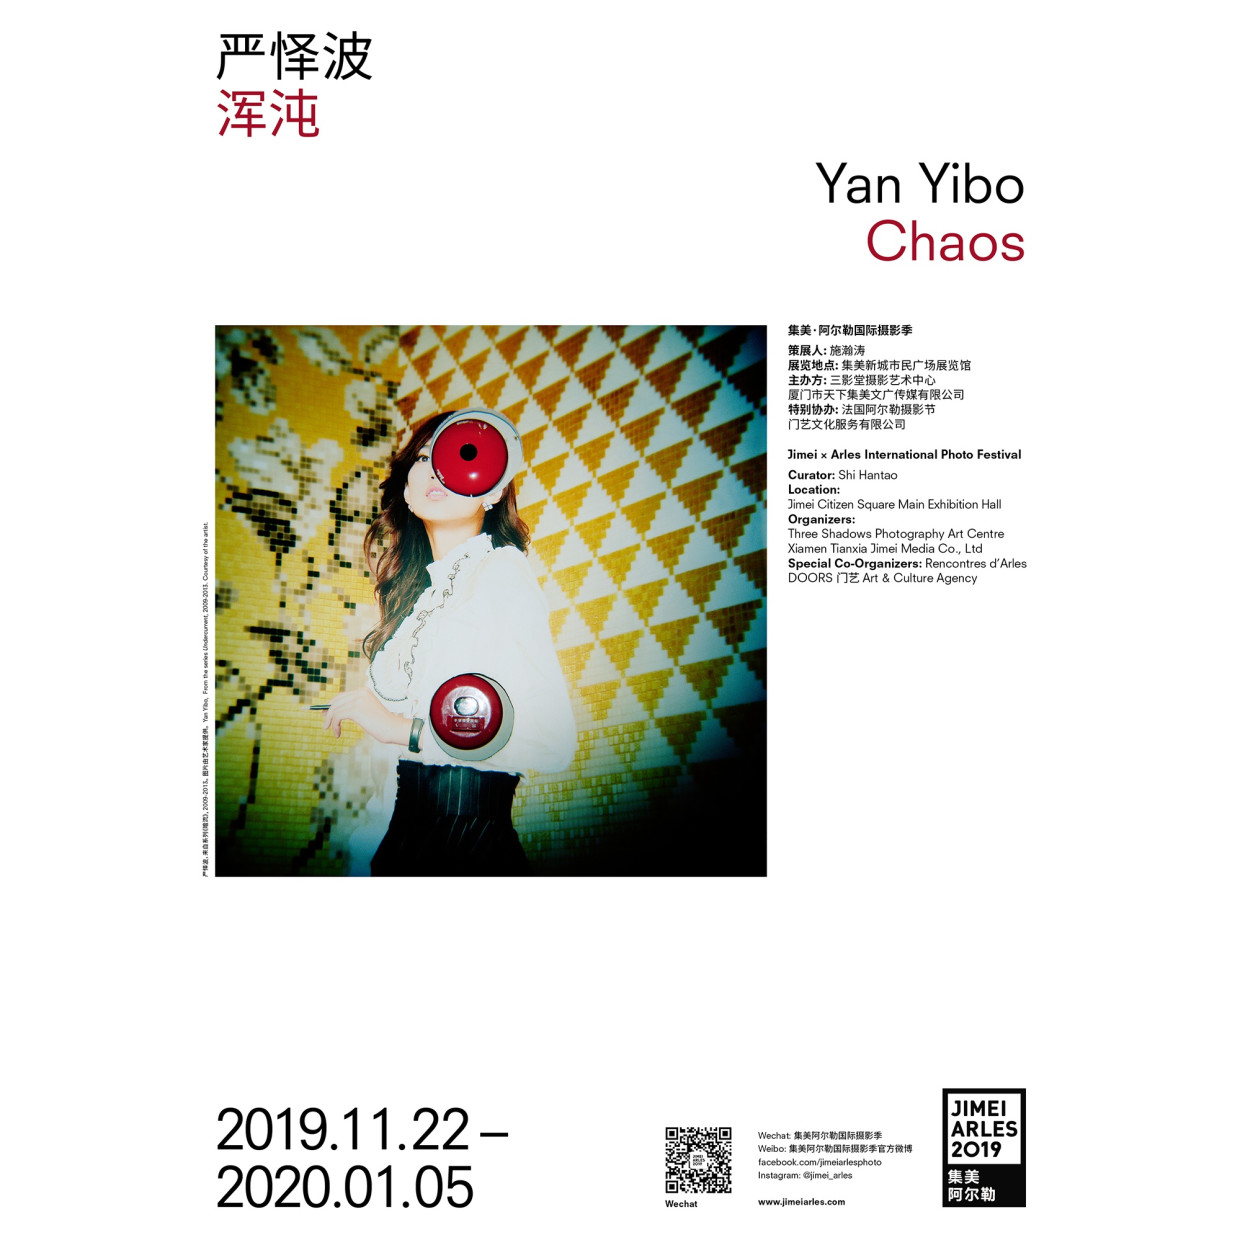 YAN YIBO CHAOS CURATED BY SHI HANTAO There can be no doubt that Yan Yibo’s guerrilla photography of streets and...